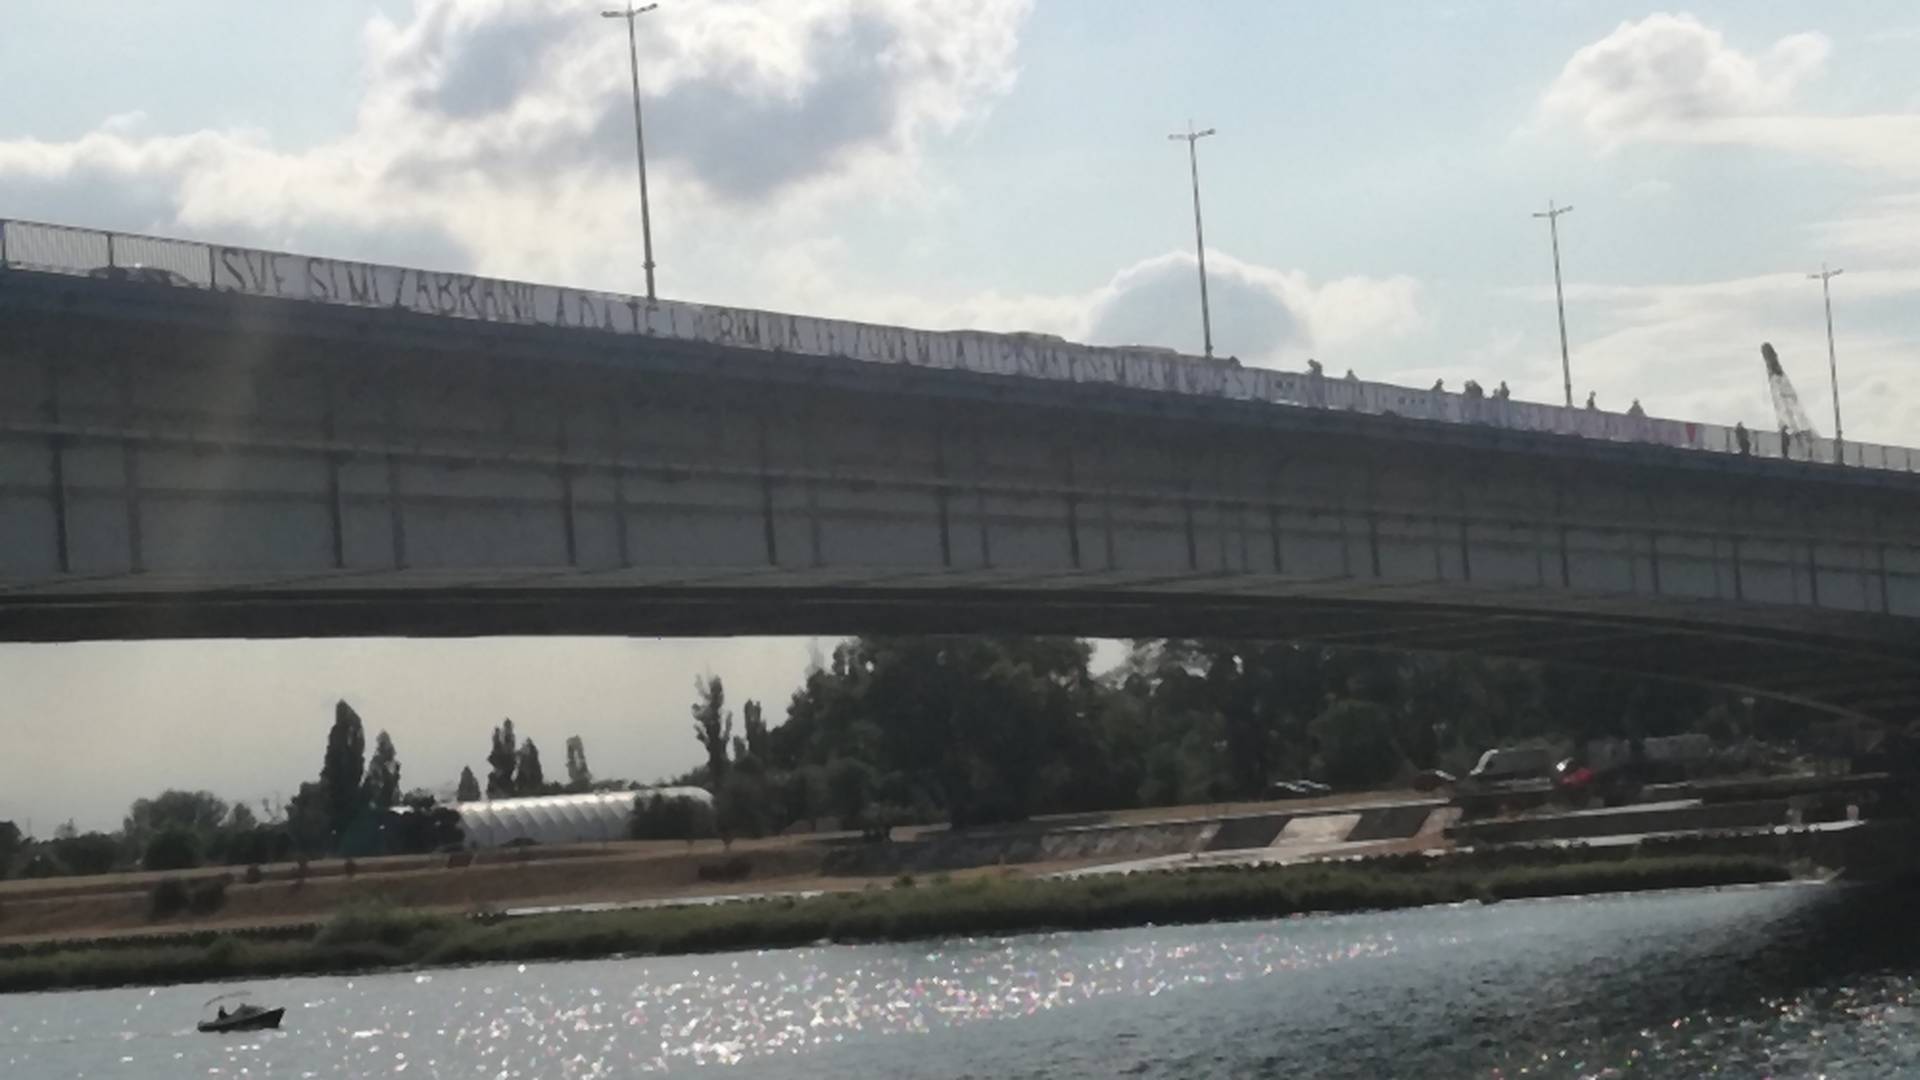 Ljubavni plakat od 91 metar viorio se Brankovim mostom